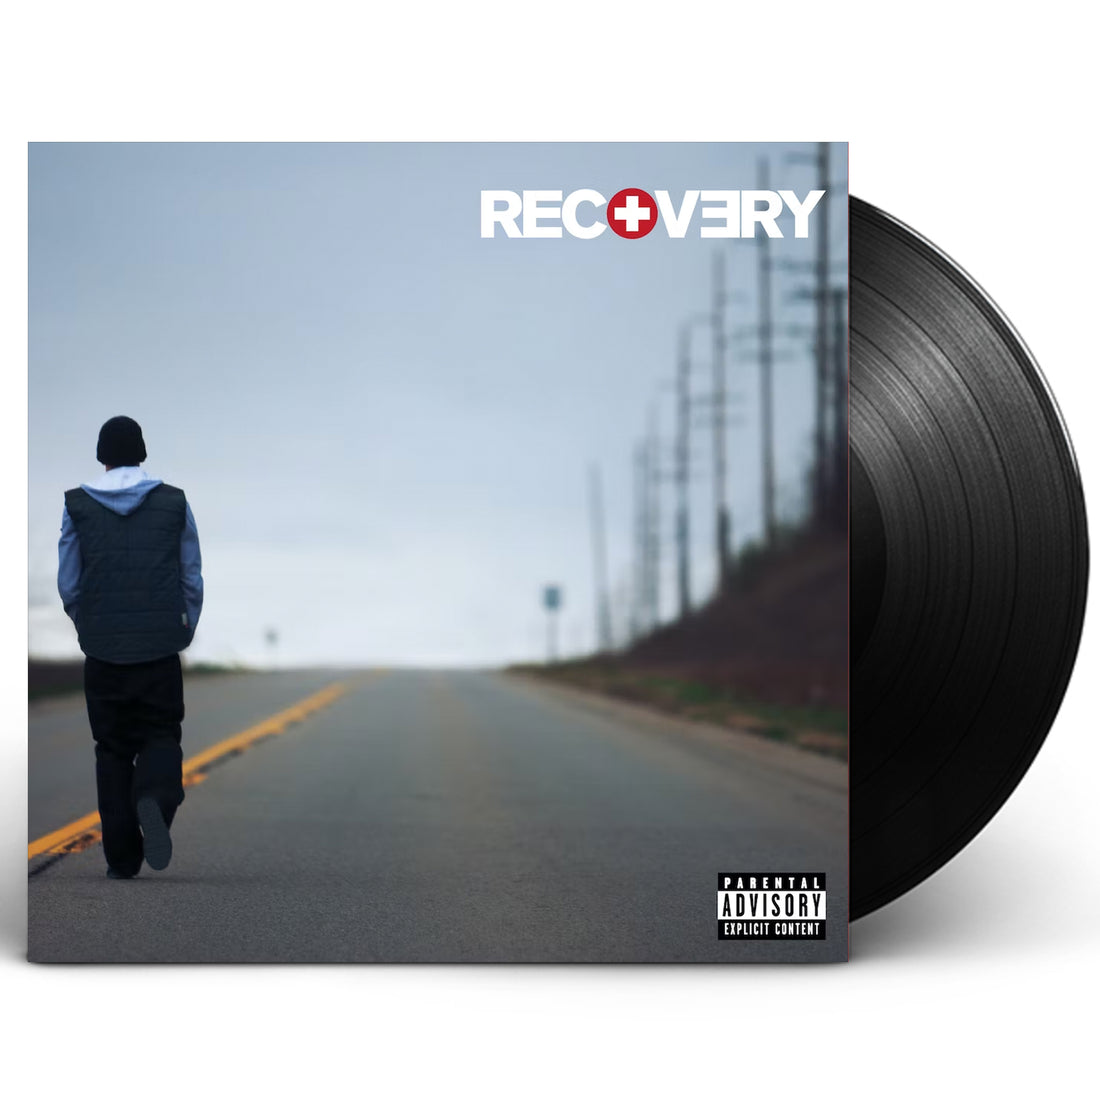 Eminem LP Vinyl Record - Relapse